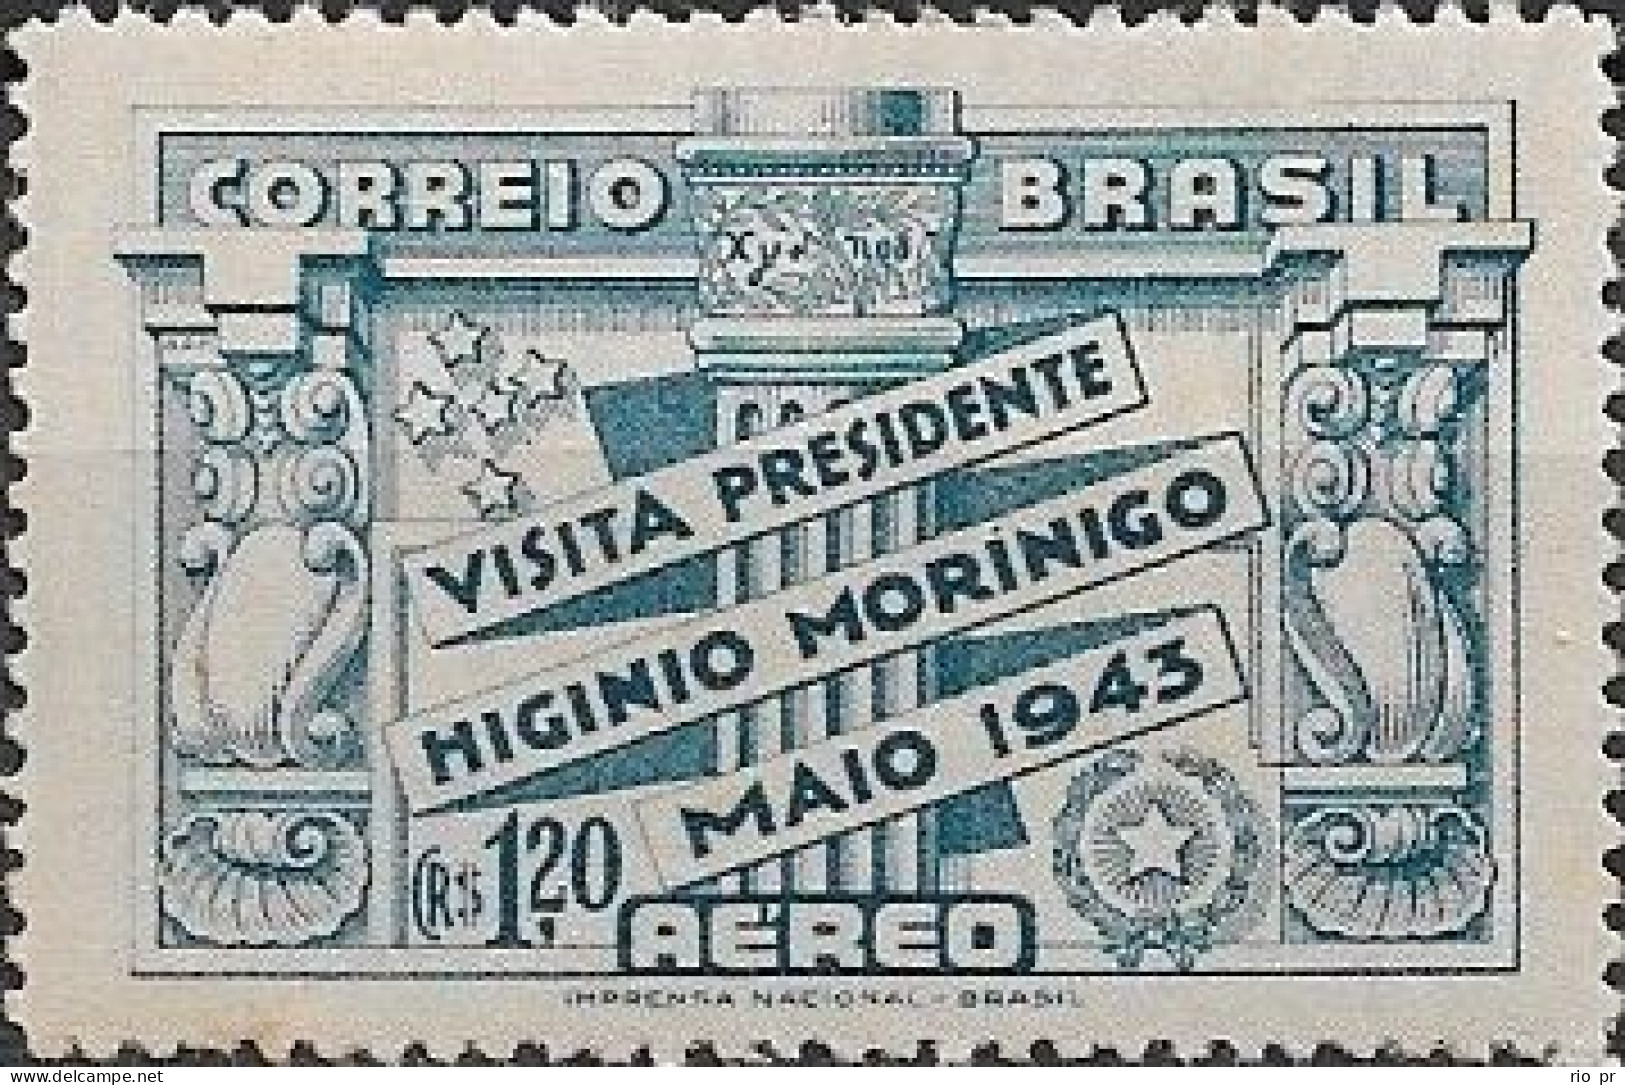 BRAZIL - VISIT OF PARAGUAY'S PRESIDENT HIGINIO MORÍÑIGO 1943 - MH - Unused Stamps